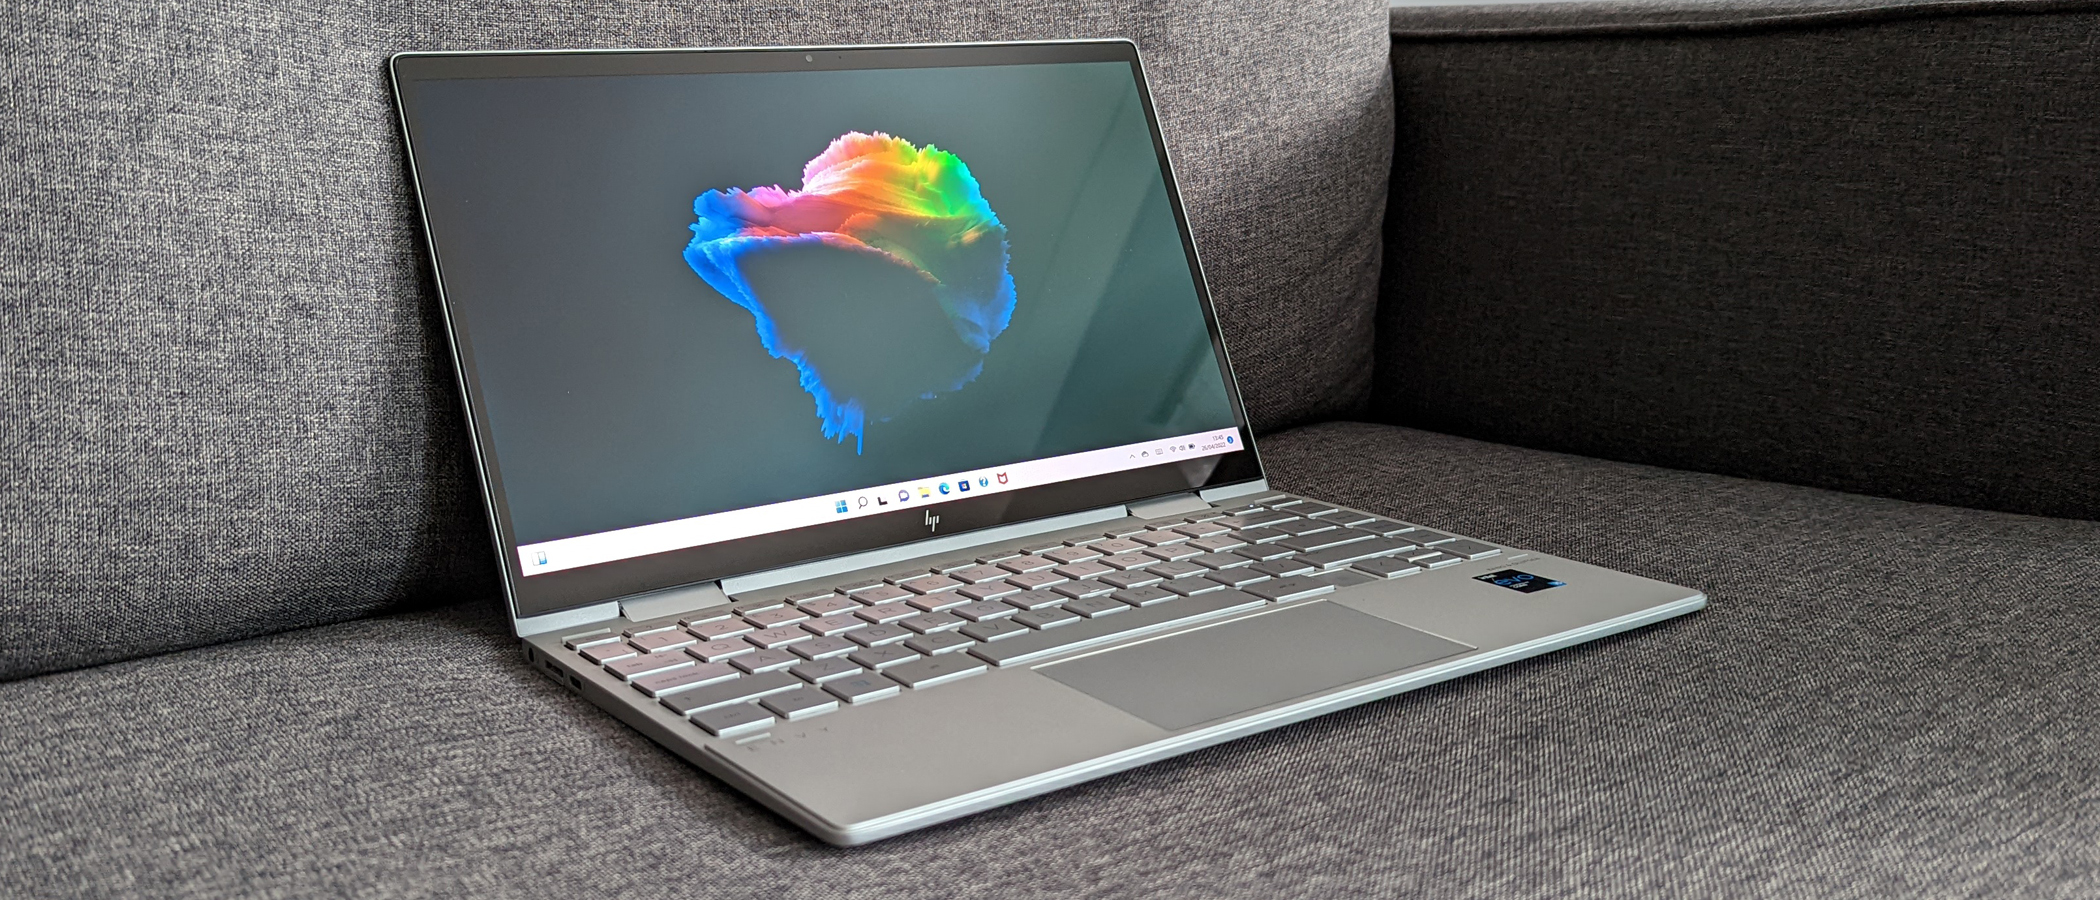 HP Envy x360 13 review: a stylish convertible laptop